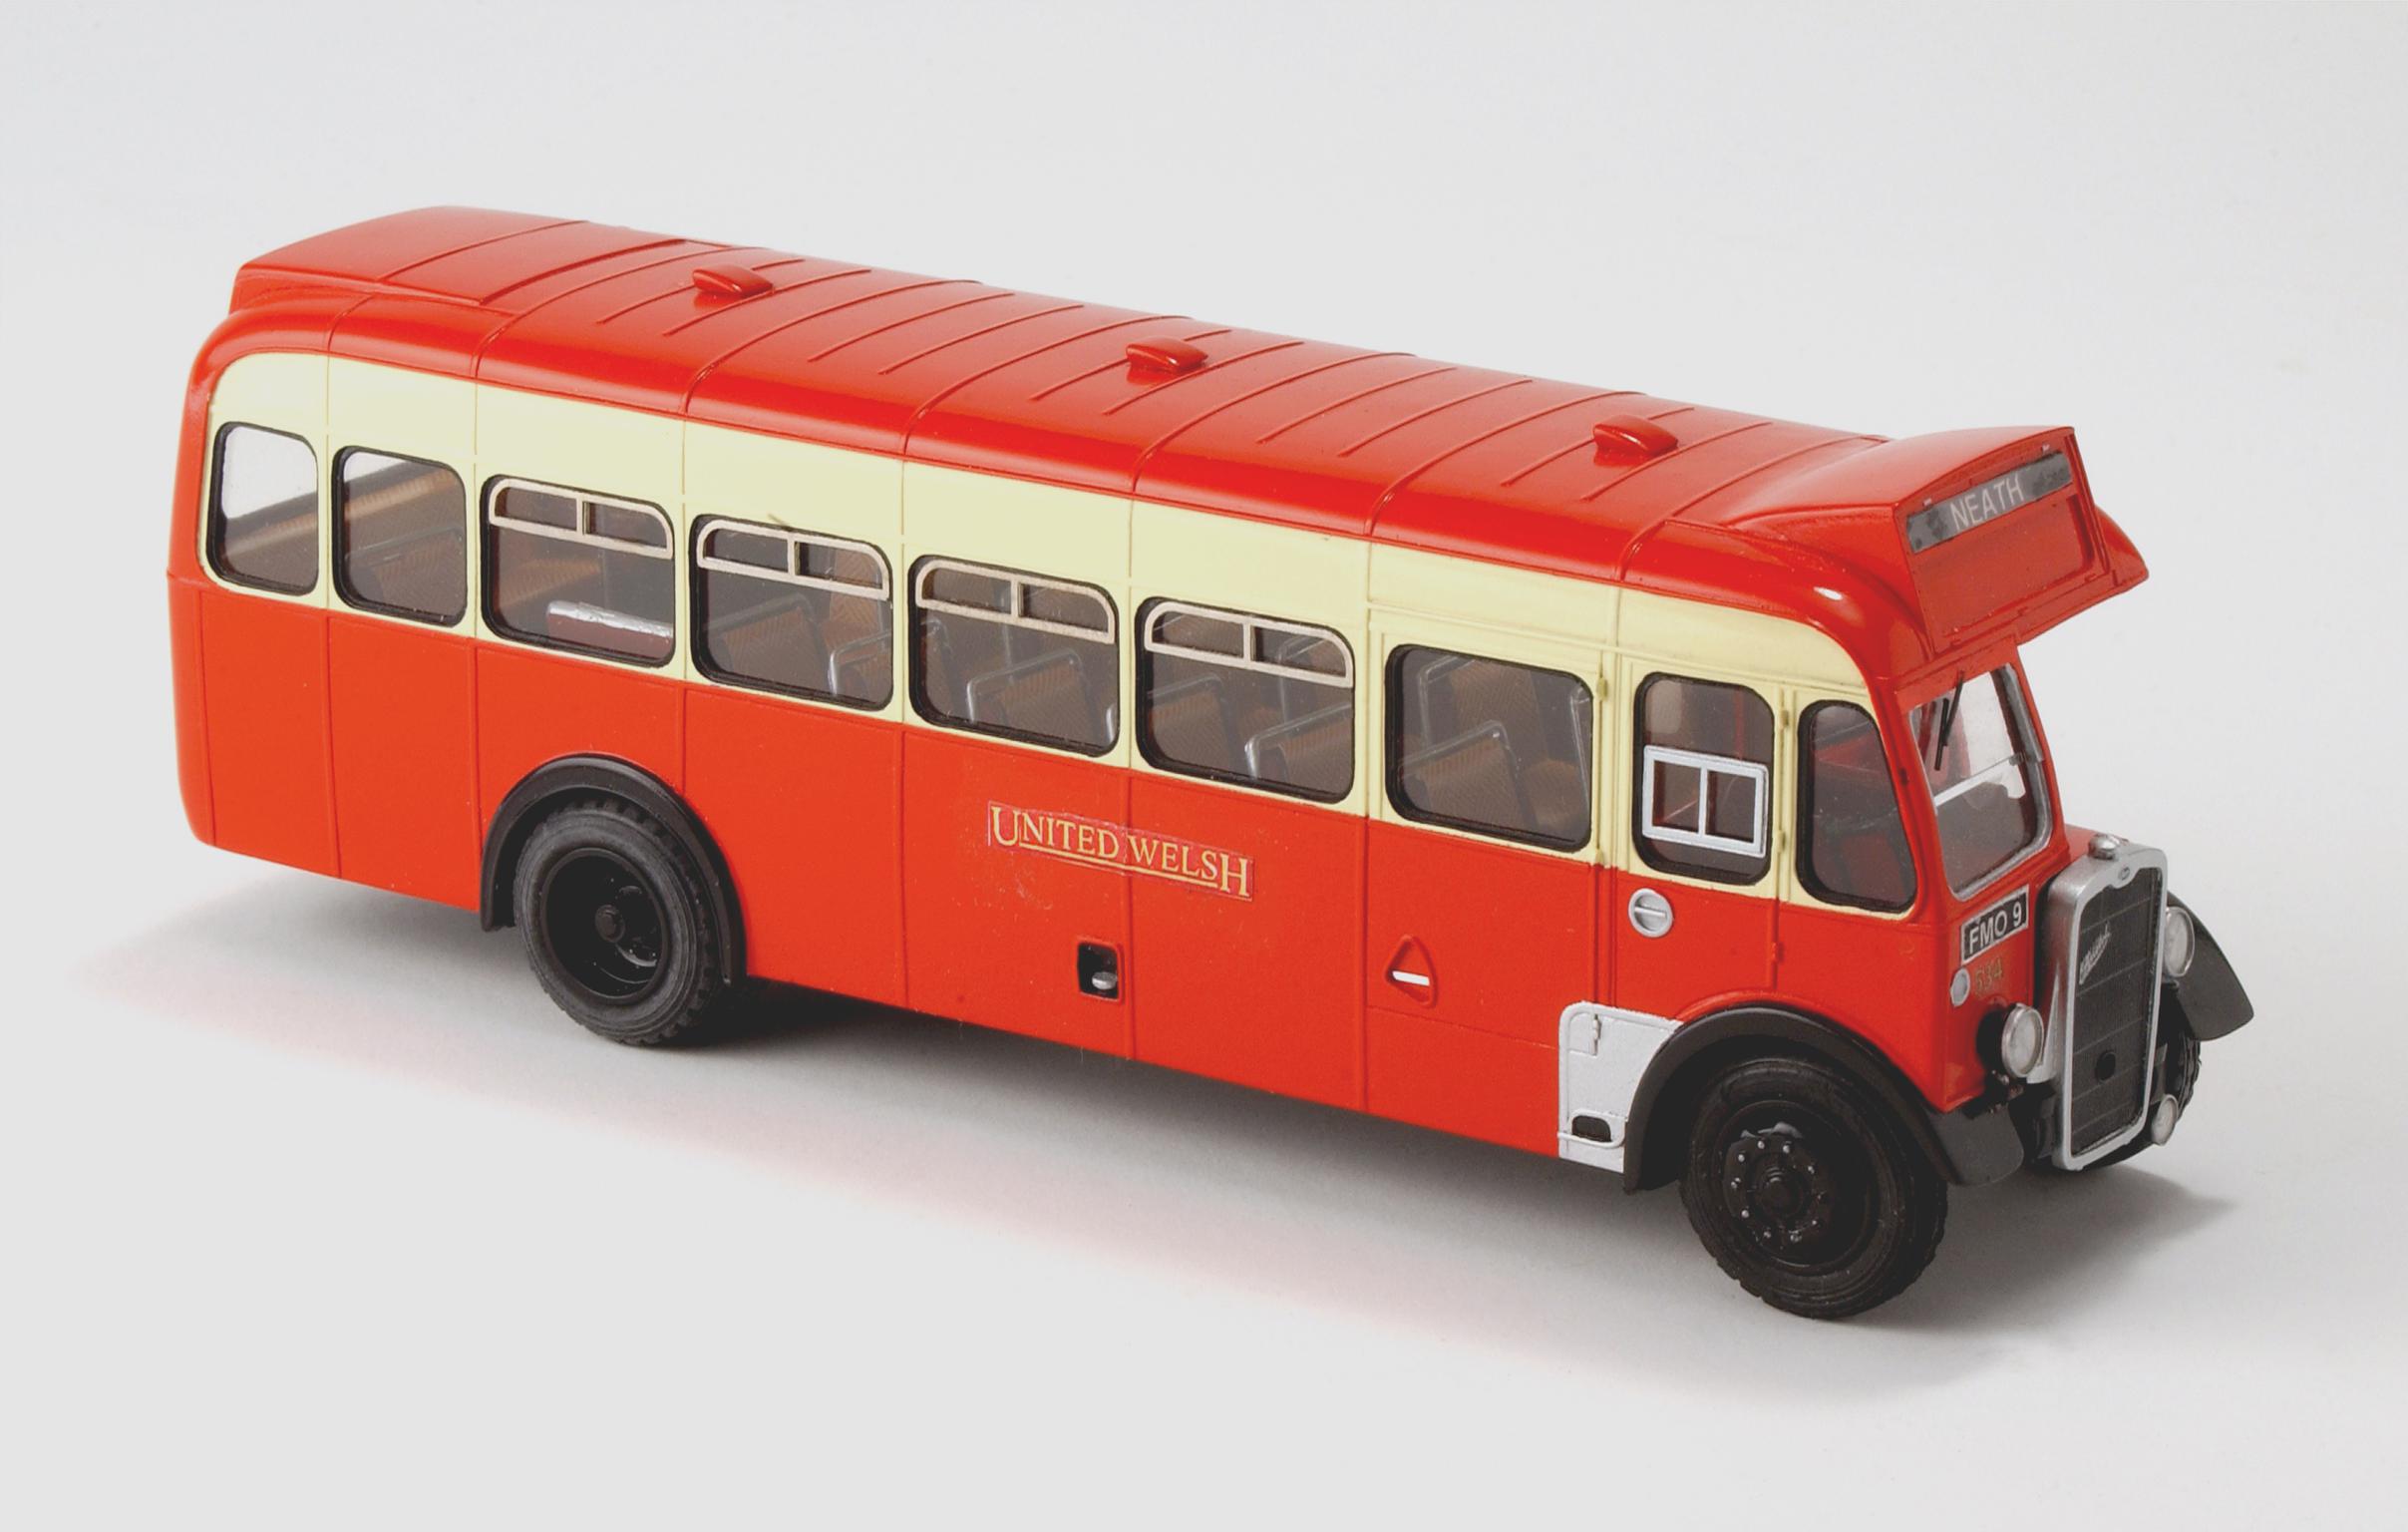 United Welsh 1949 single deck bus, model